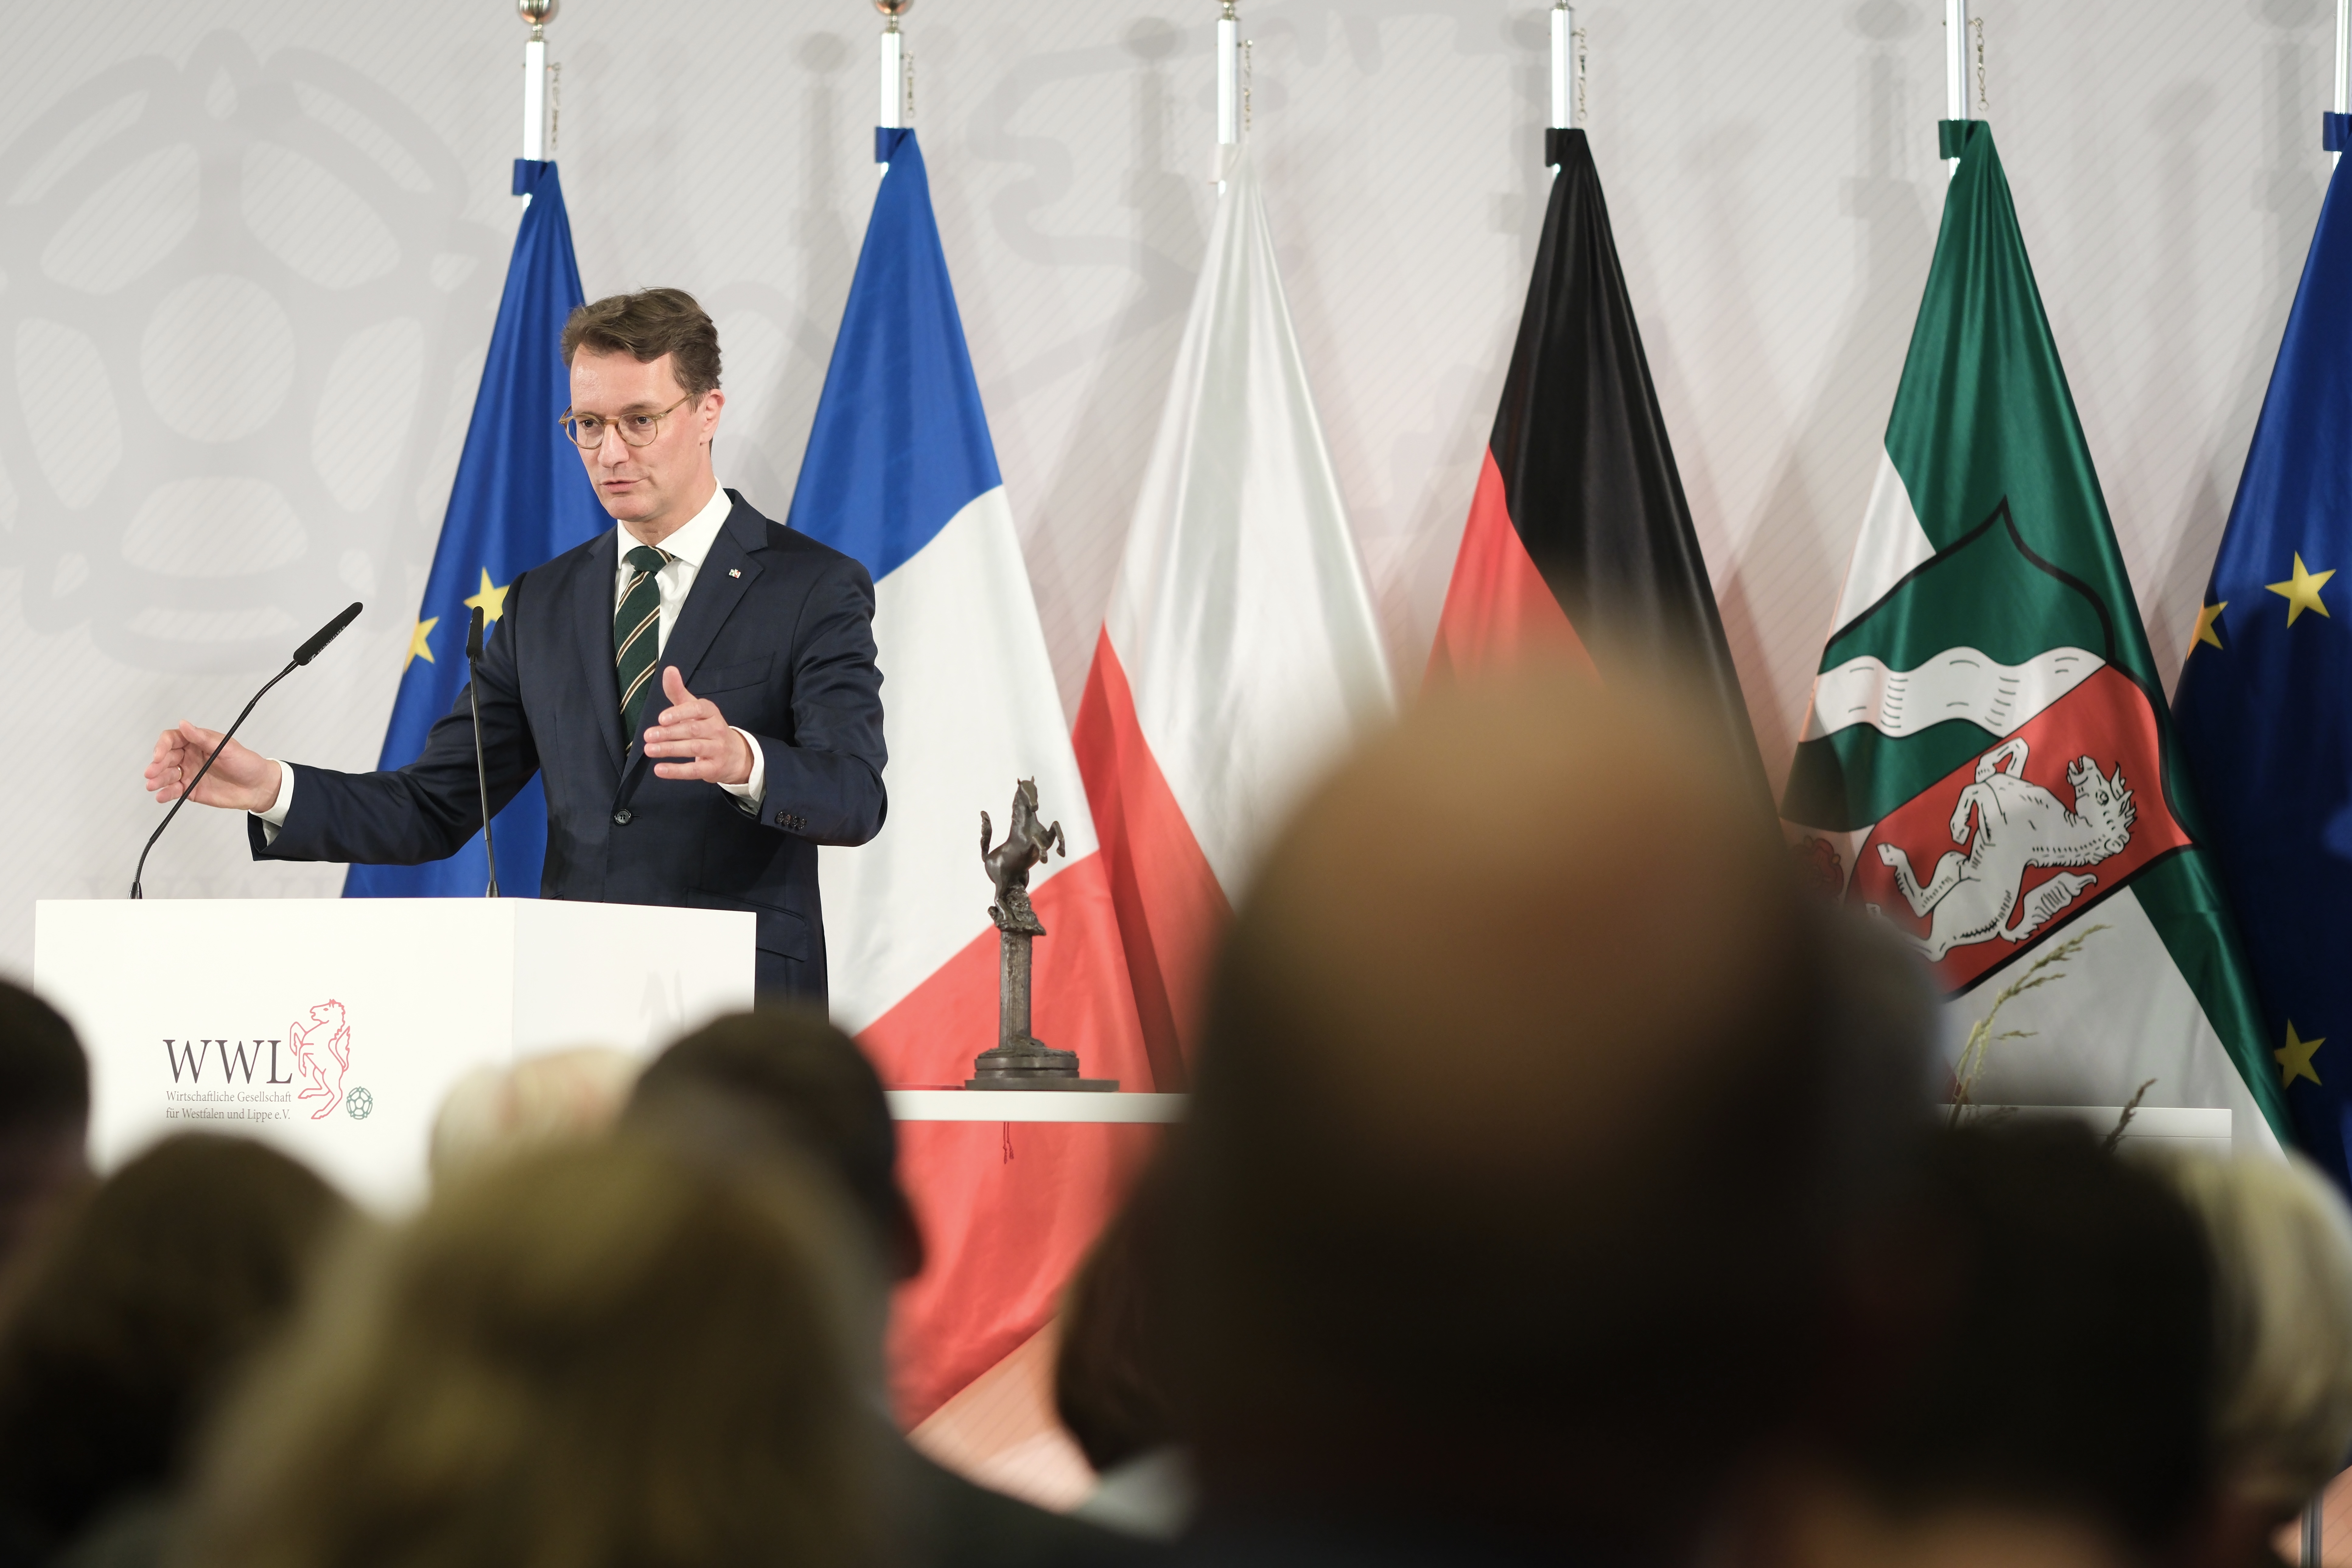 Closing speech by NRW Prime Minister Hendrik Wüst